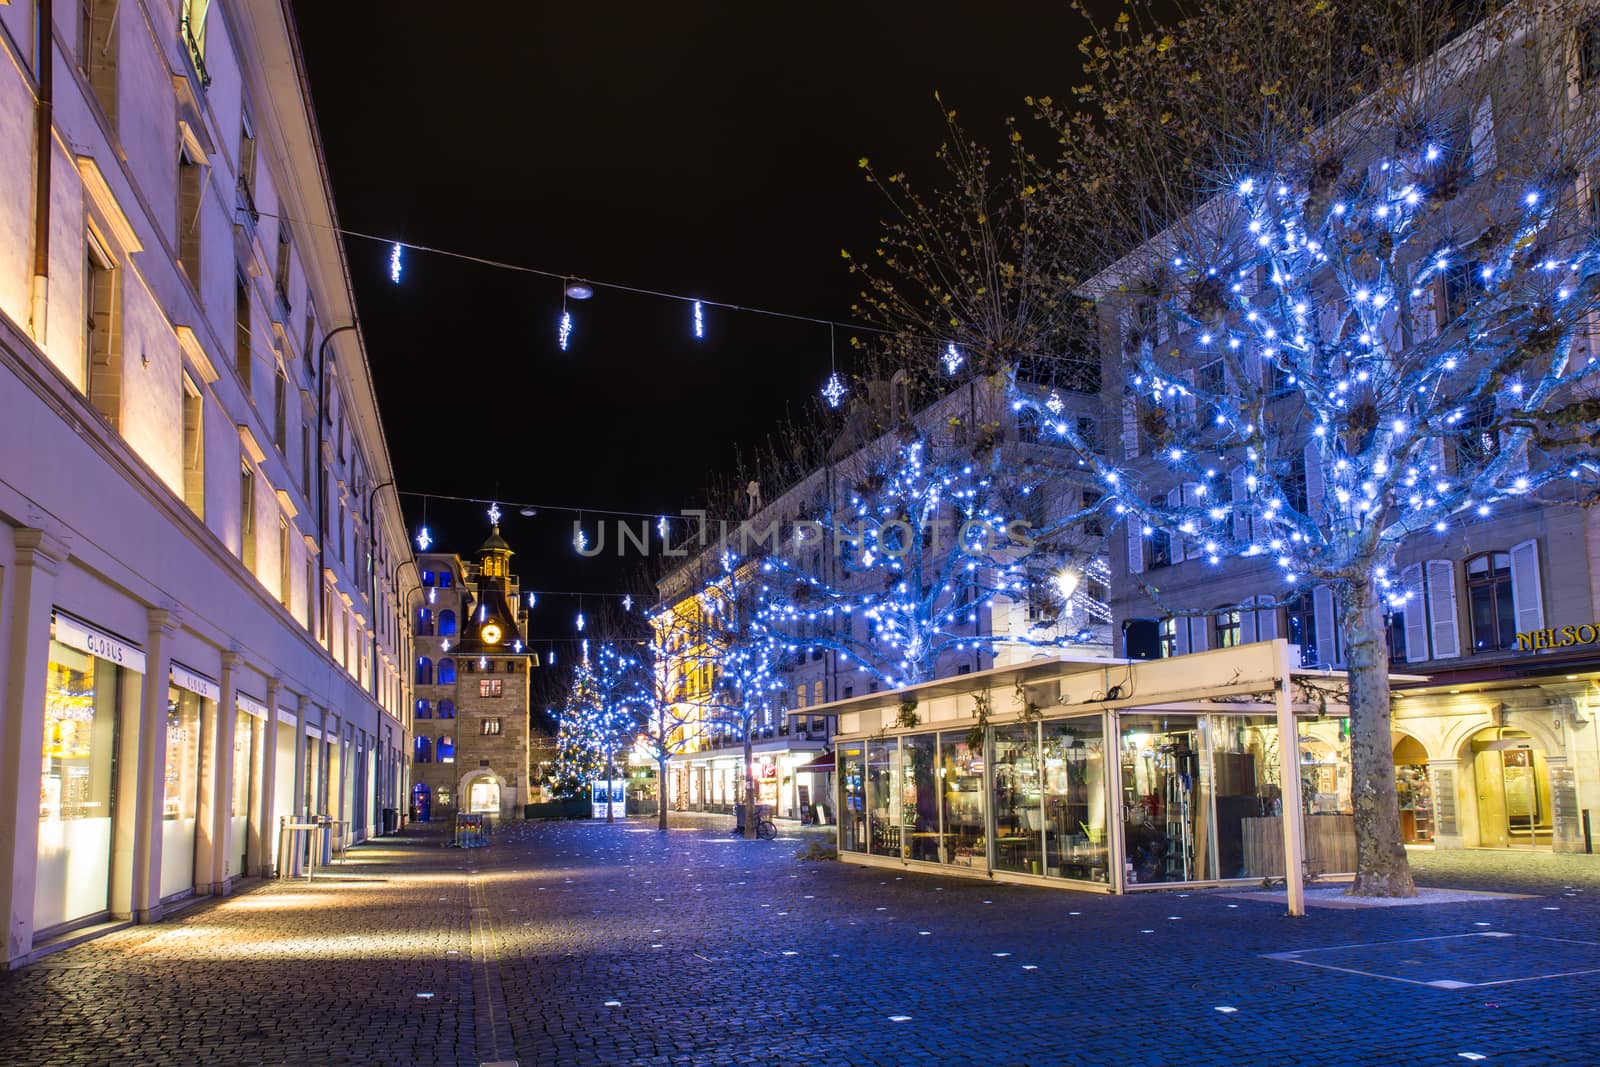 Geneva, Switzerland - December 13, 2014: The Molard square at night illuminated by Christmas decorations, in downtown Geneva.